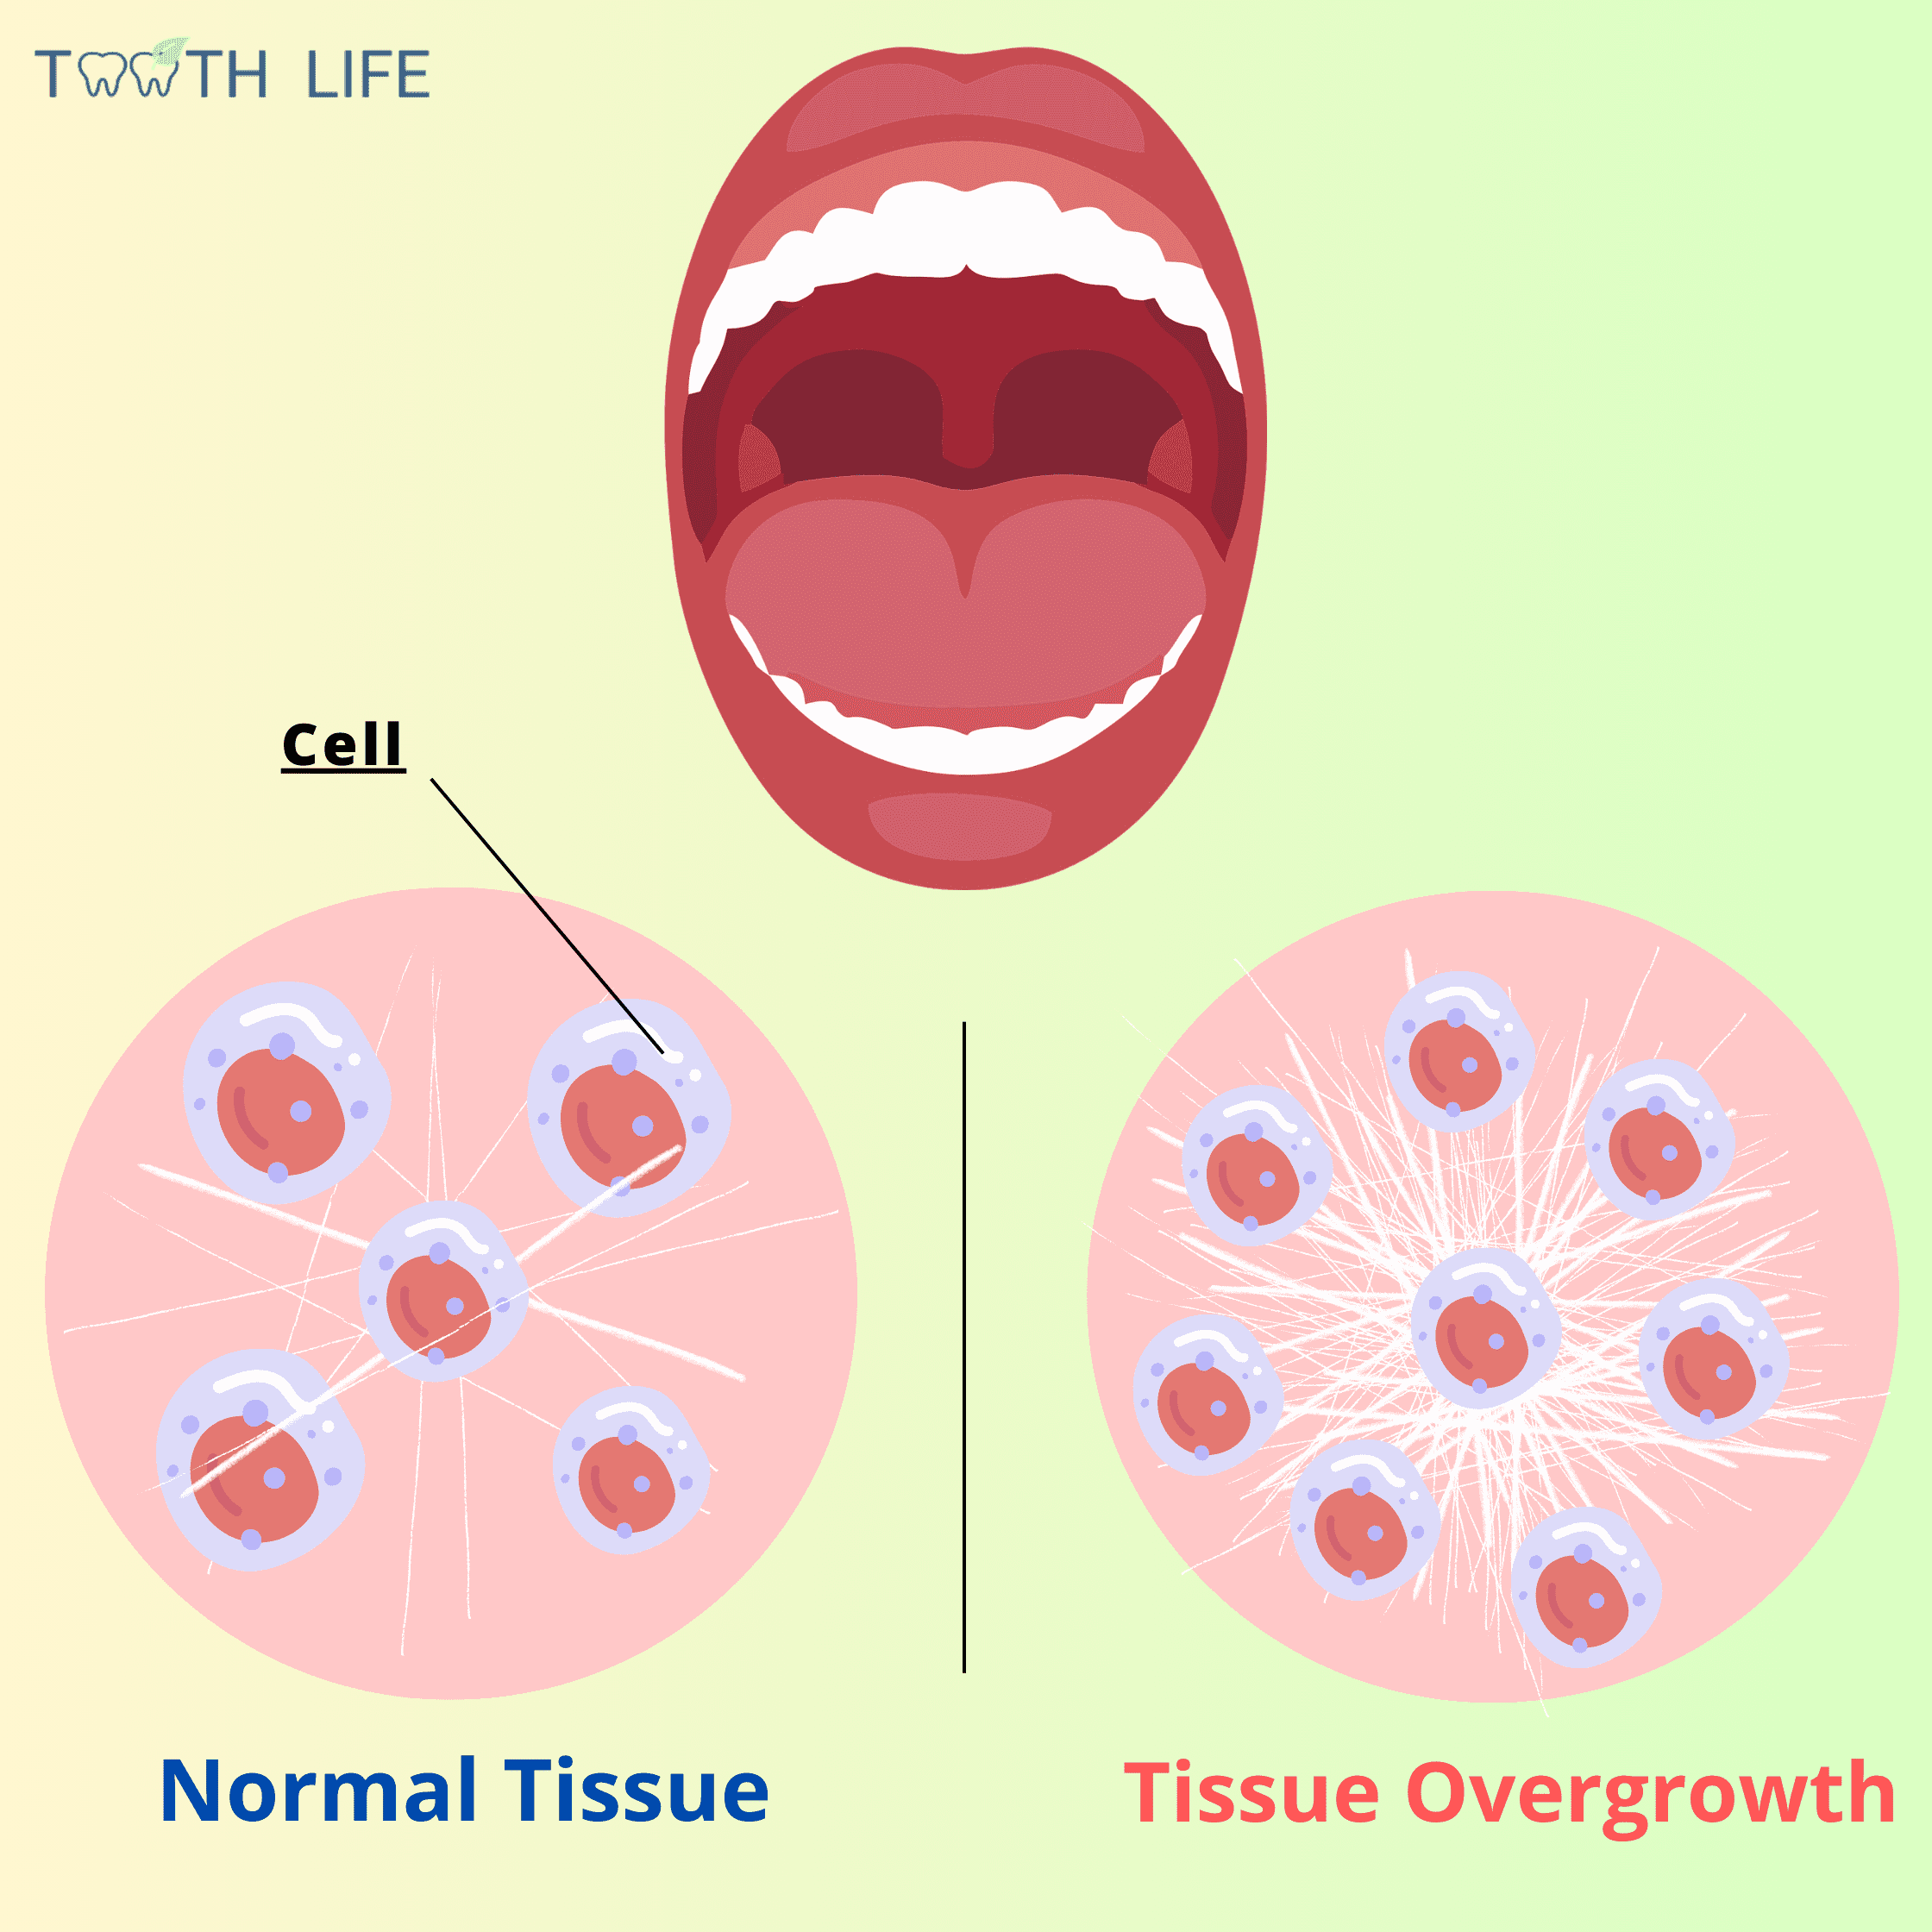 Normal tissue vs fibrous tissue overgrowth